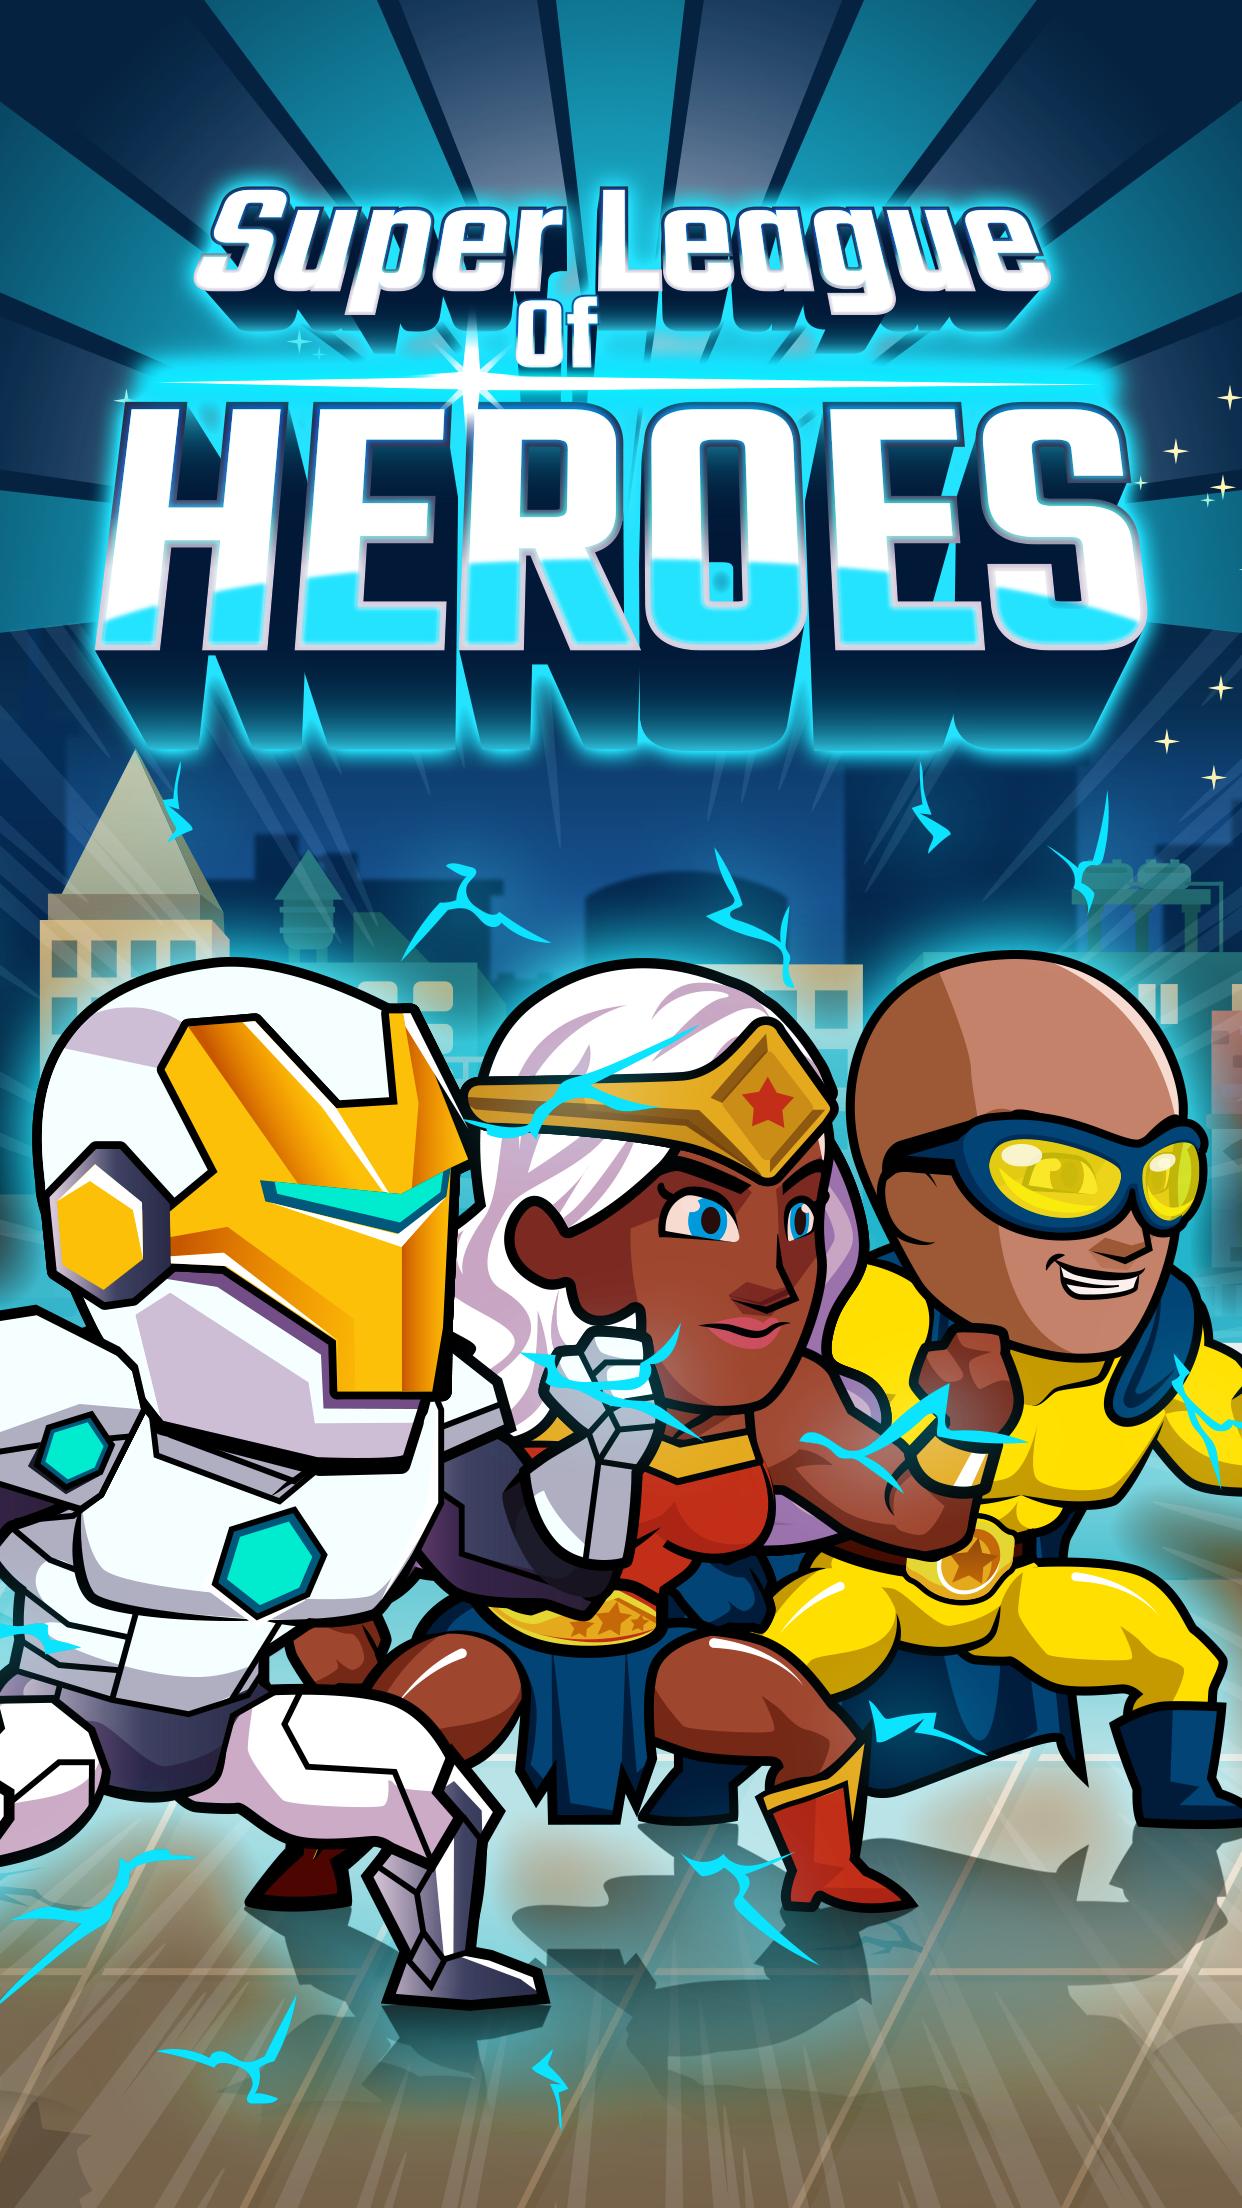 Super League of Heroes - Comic Book Champions 1.0.7 Screenshot 1